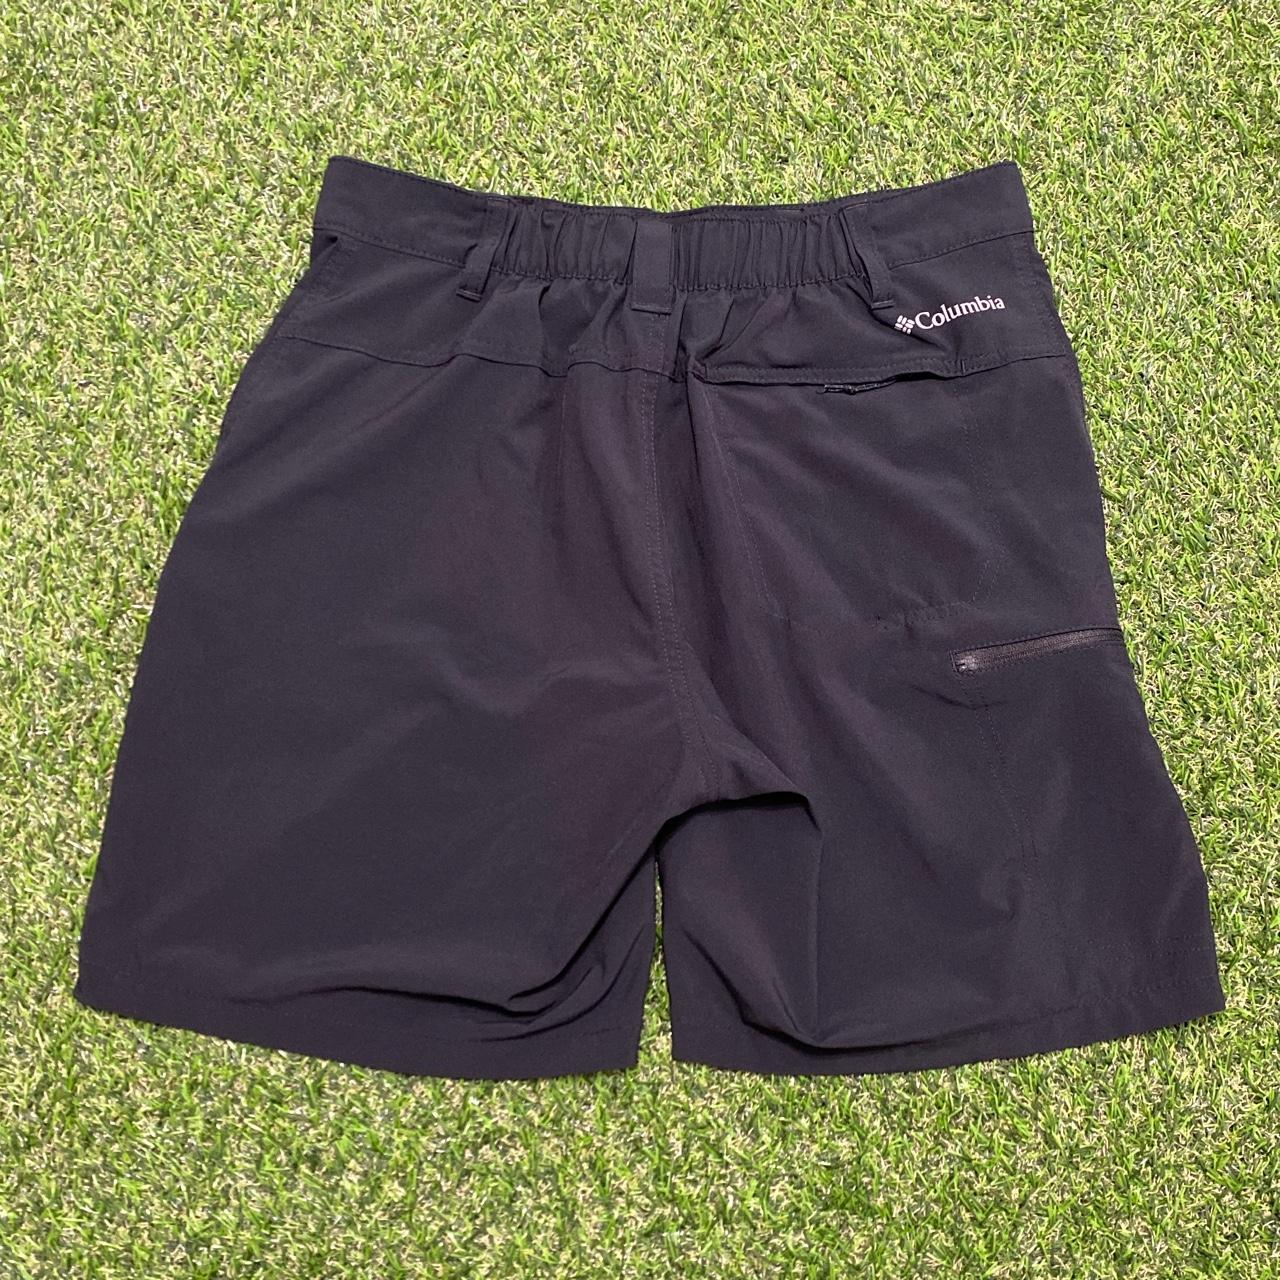 Essential Columbia Shorts Size 32/42 Lightweight - Depop